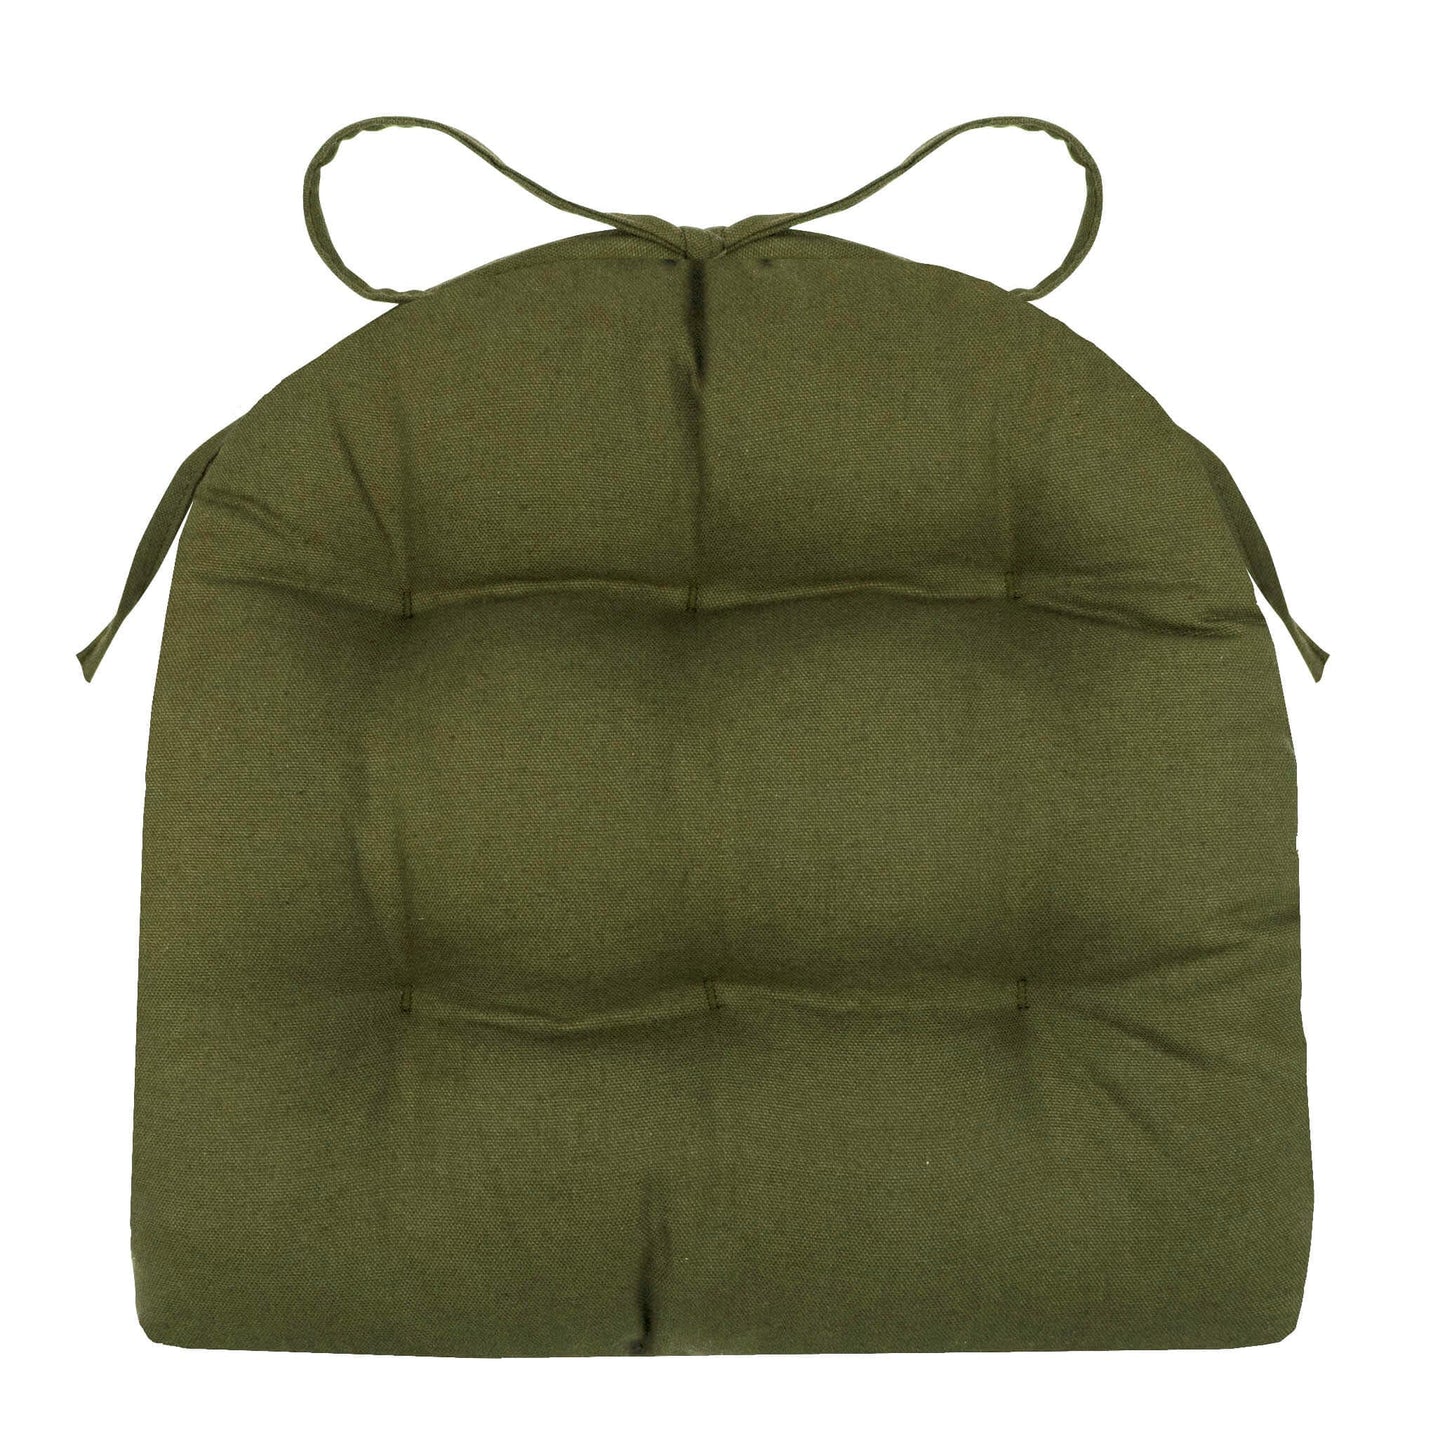 Cotton Duck Boxwood Green Industrial Chair Cushion - Latex Foam Fill - Barnett Home Decor - Olive